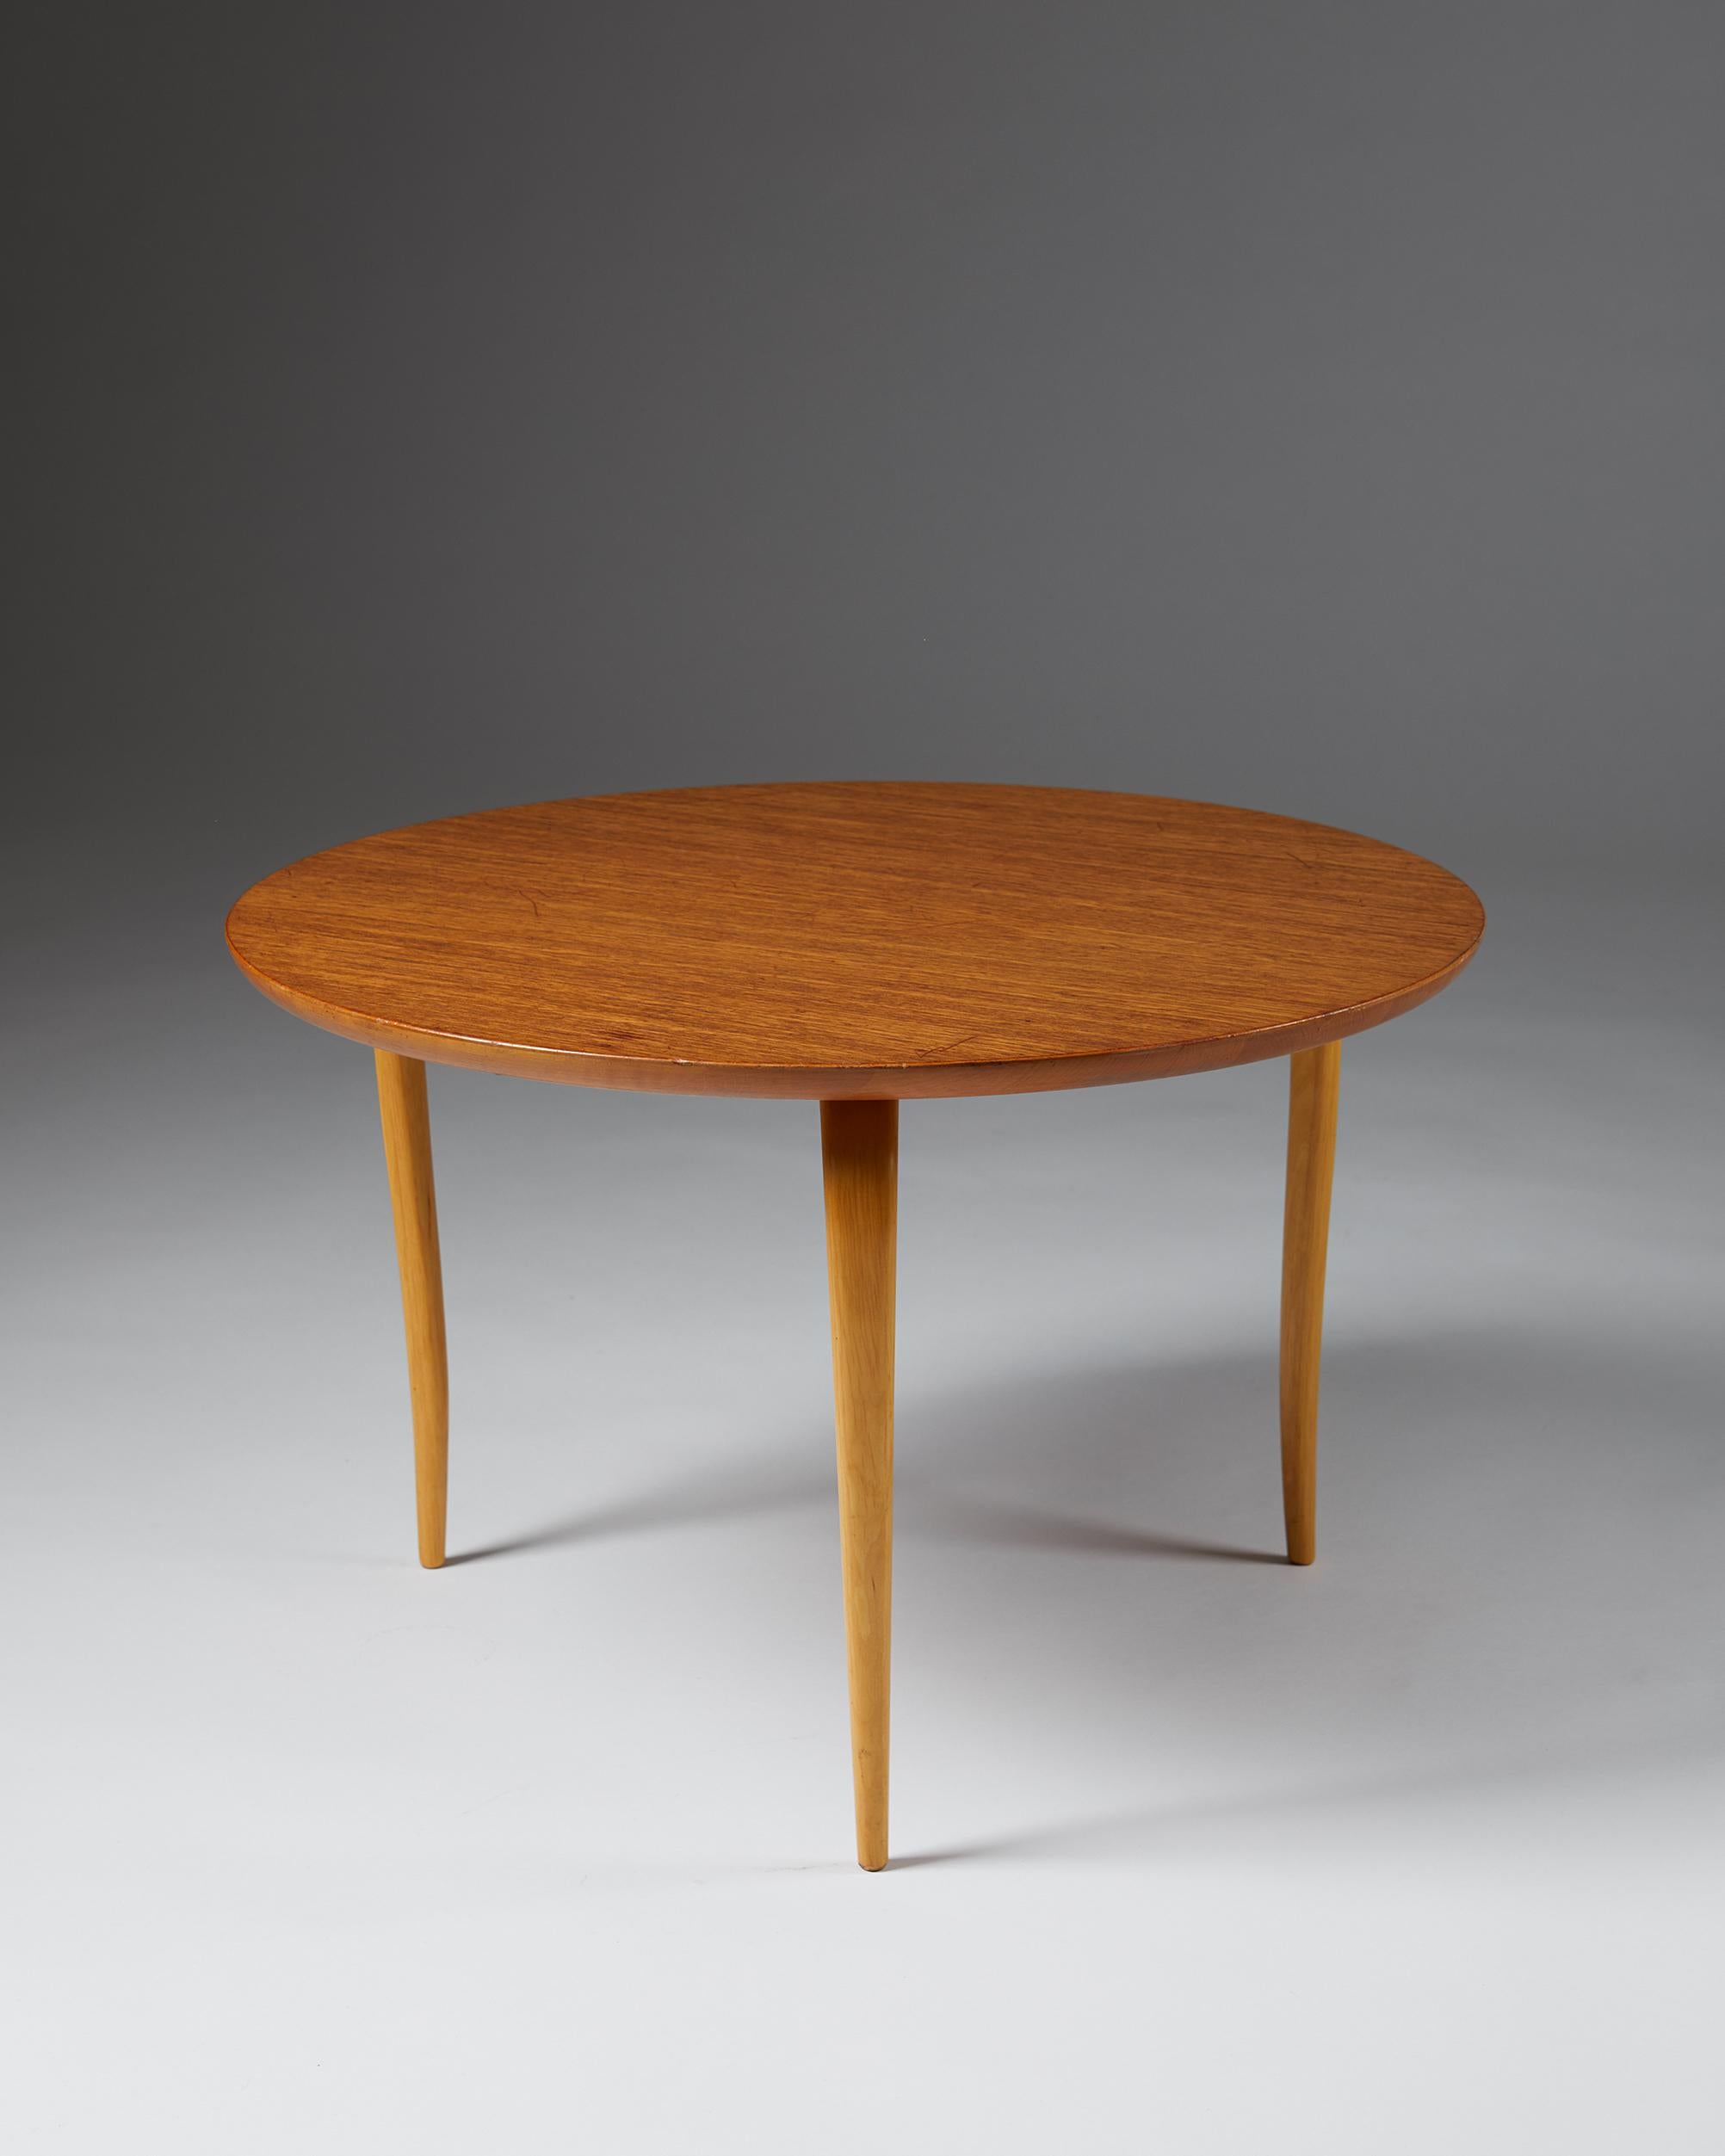 Mid-Century Modern Occasional Table “Annika” Designed by Bruno Mathsson for Karl Mathsson, Sweden 